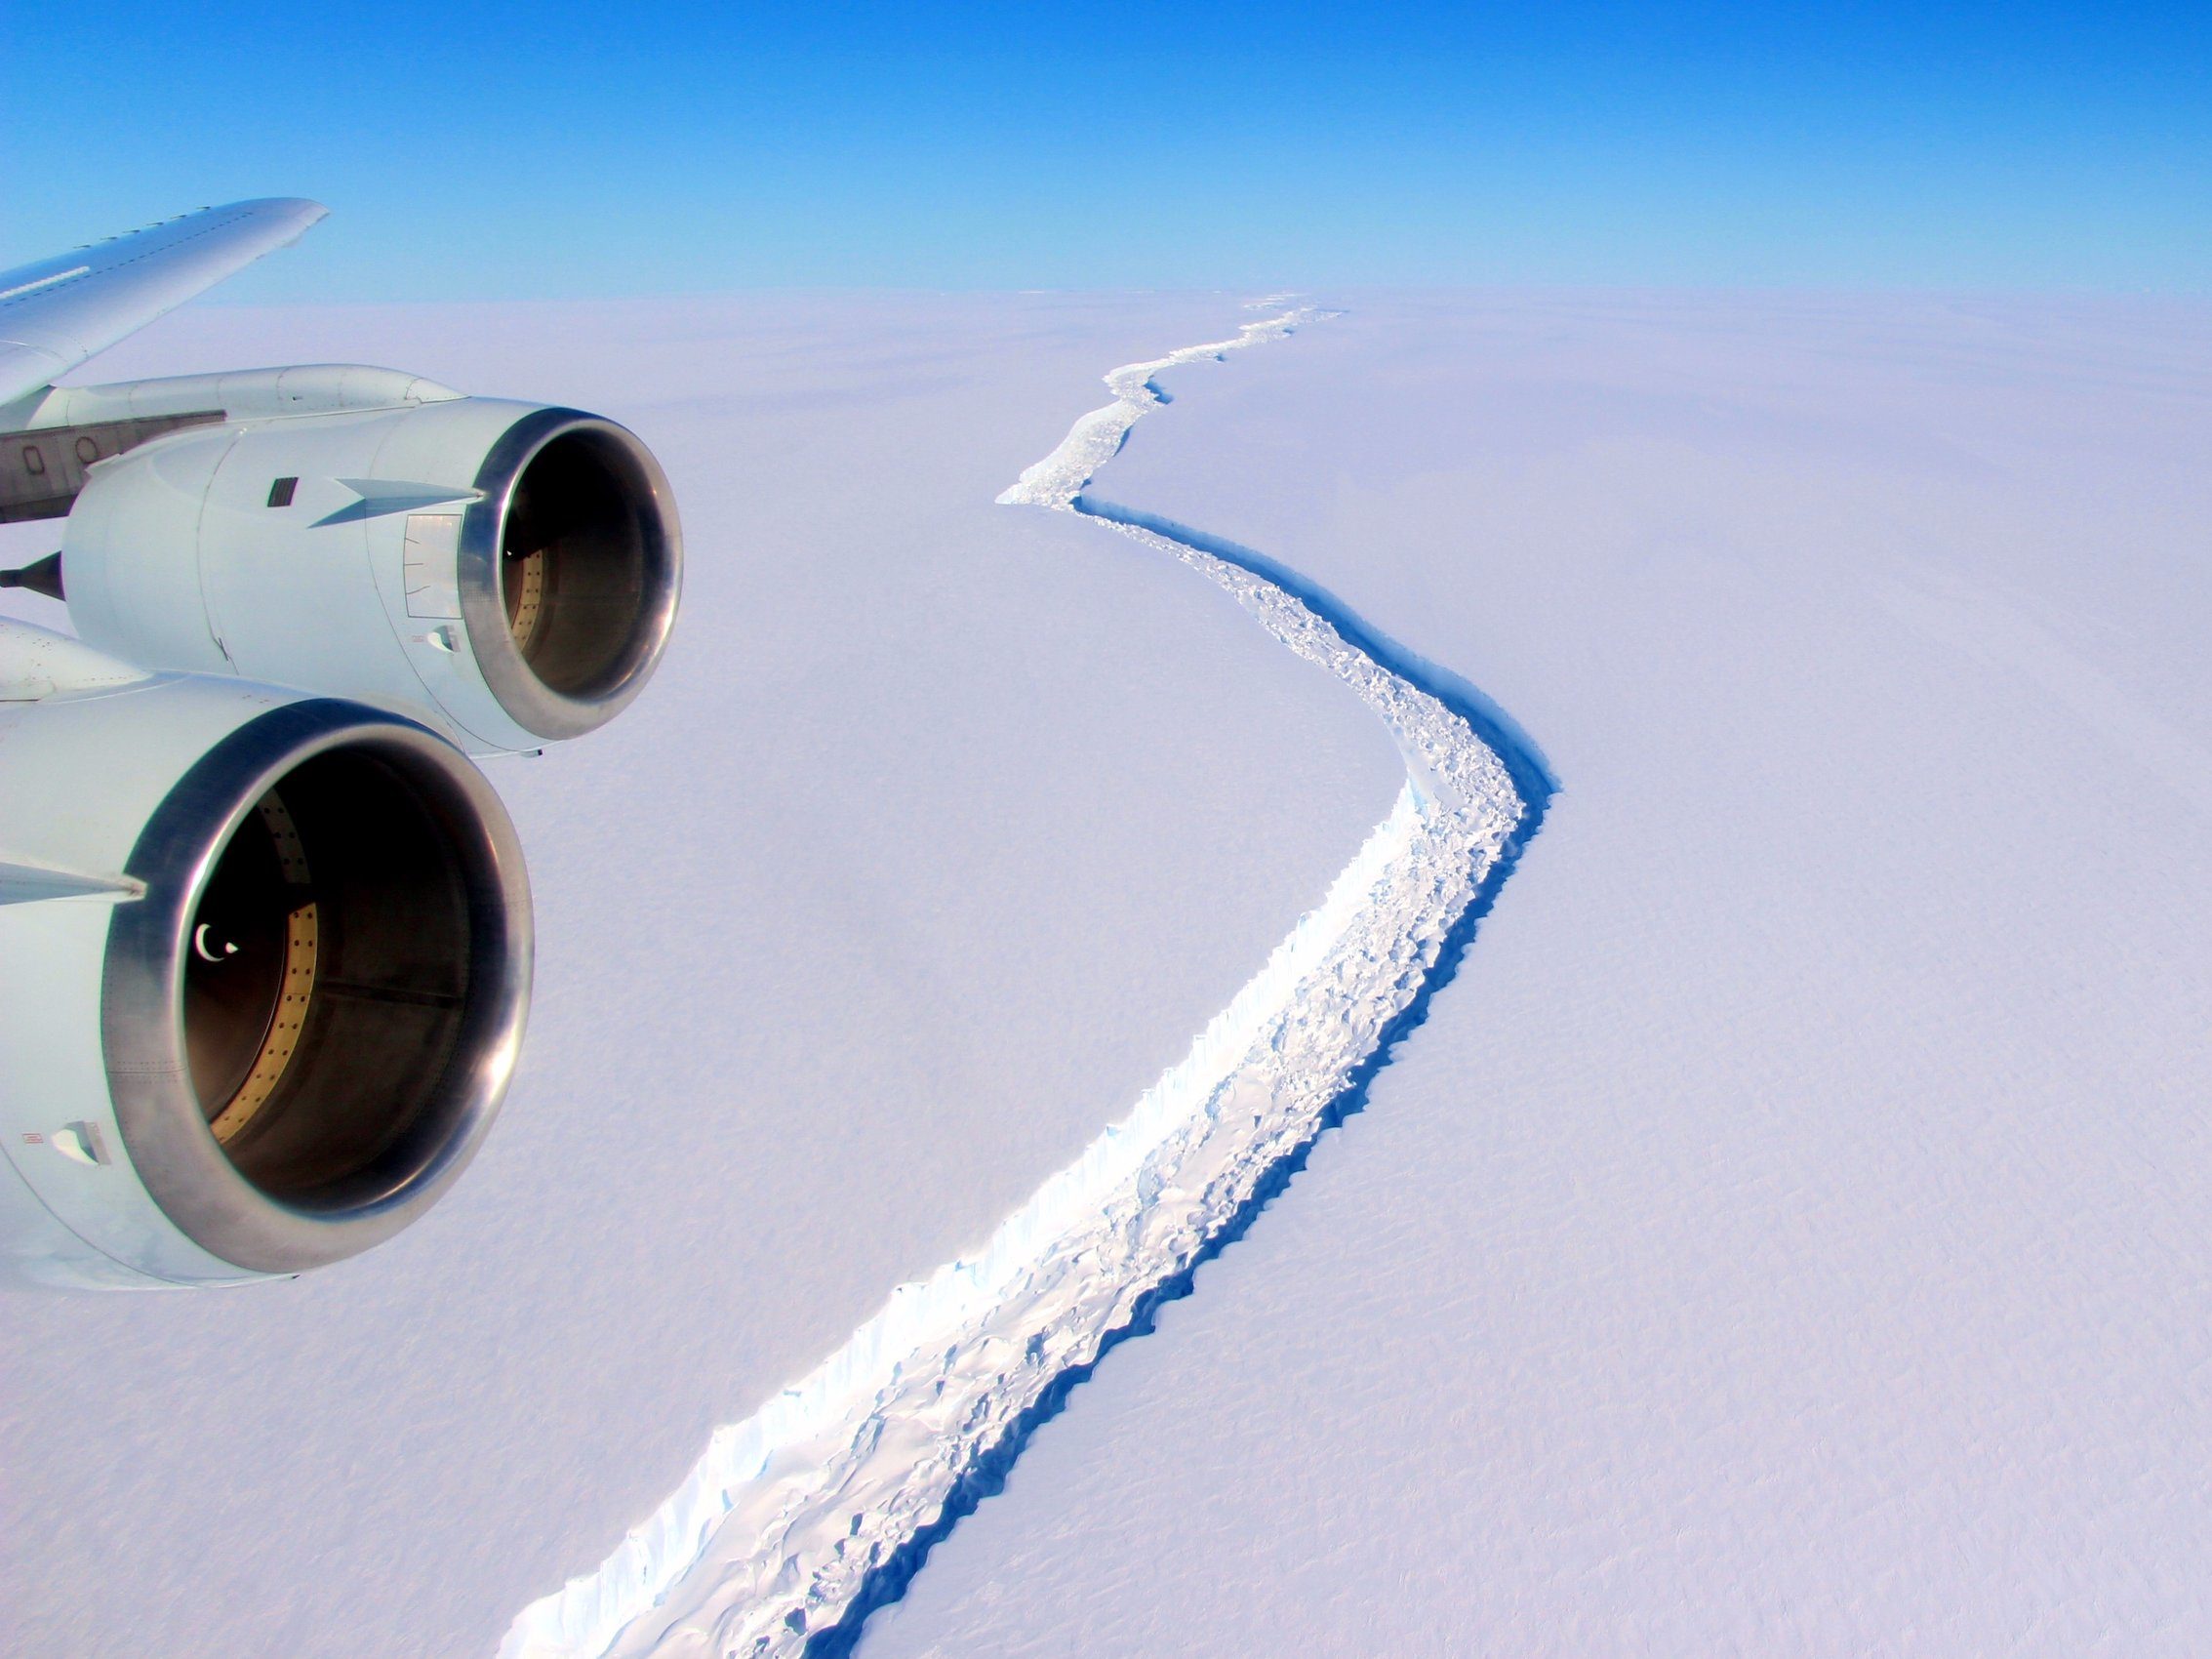 Antarctica's Larsen C ice shelf